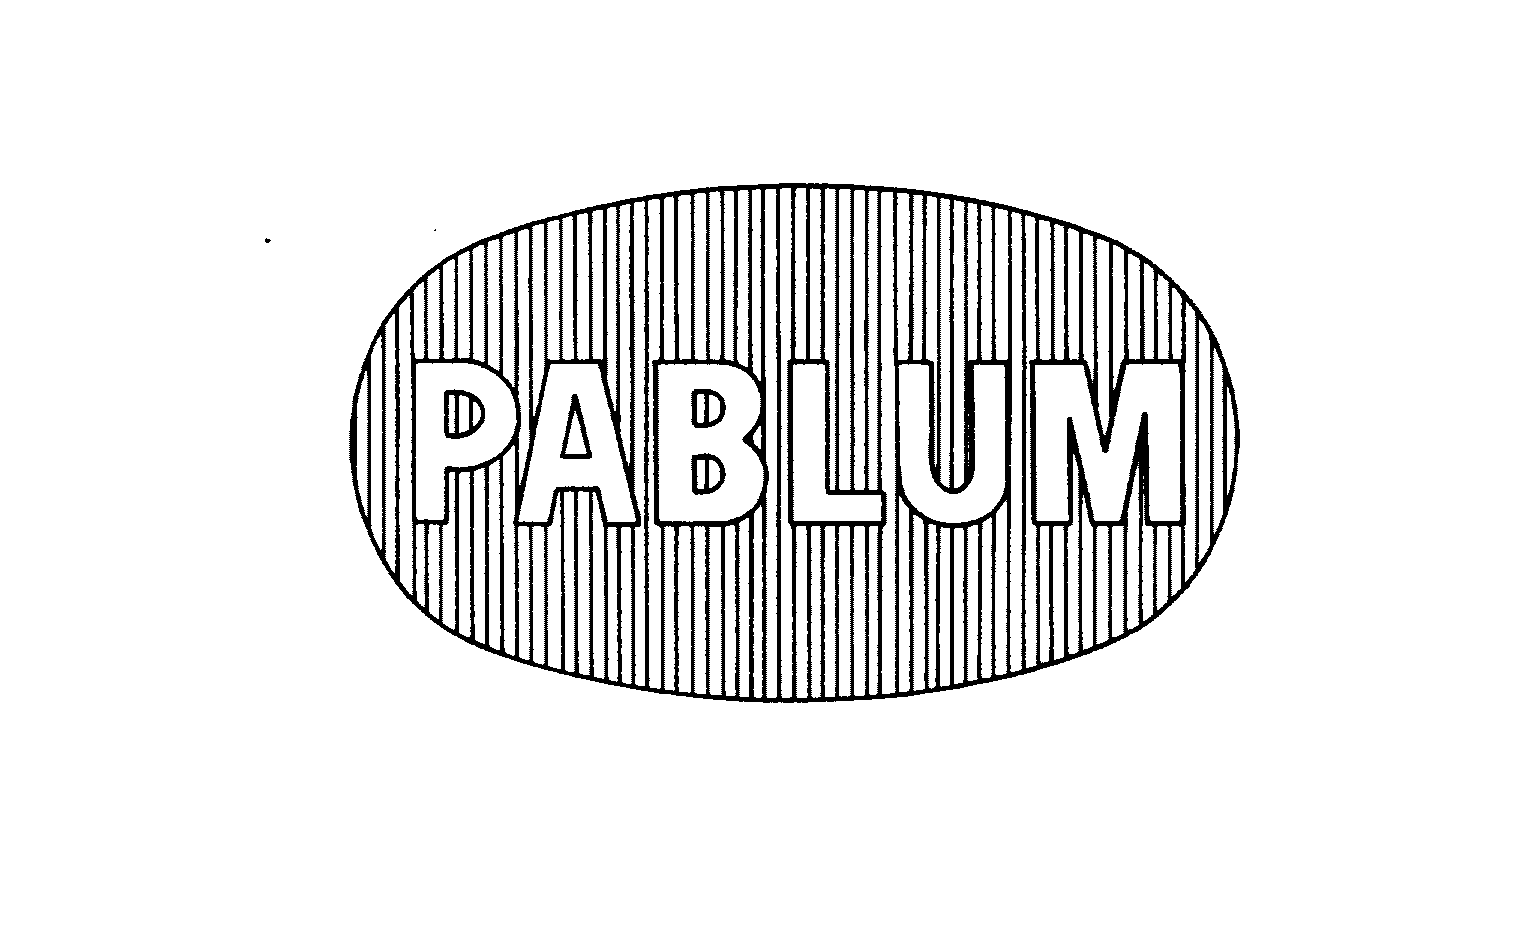 PABLUM